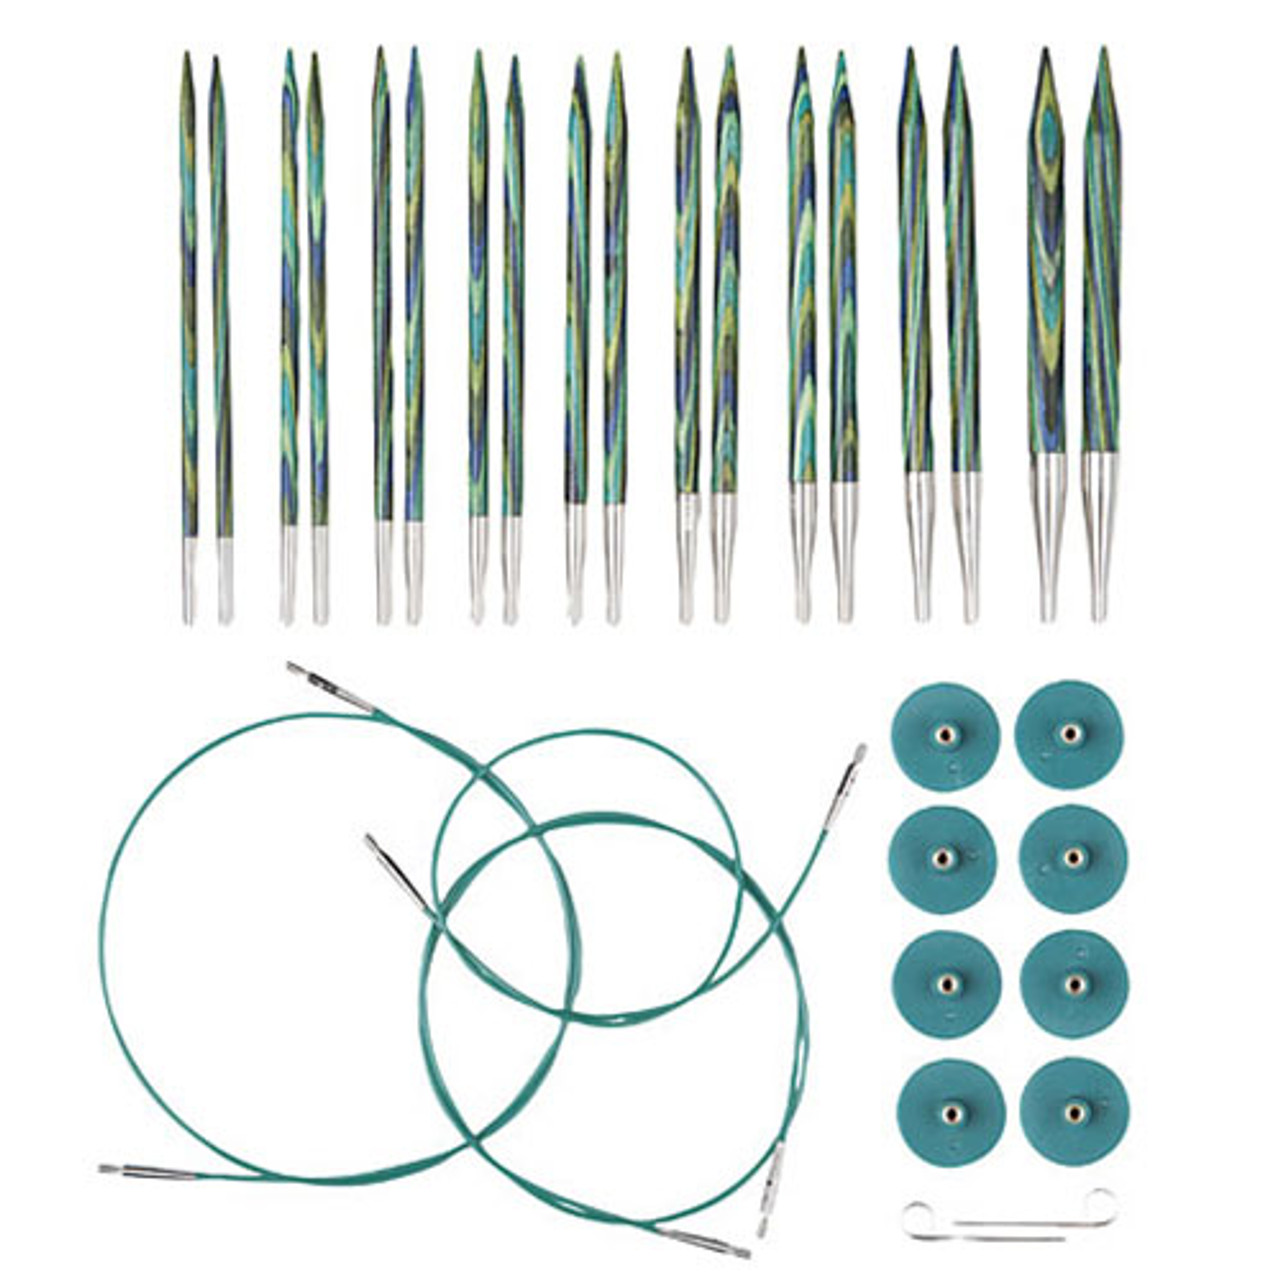 Knit Picks Prism Interchangeable Needles Review - Stitches n Scraps